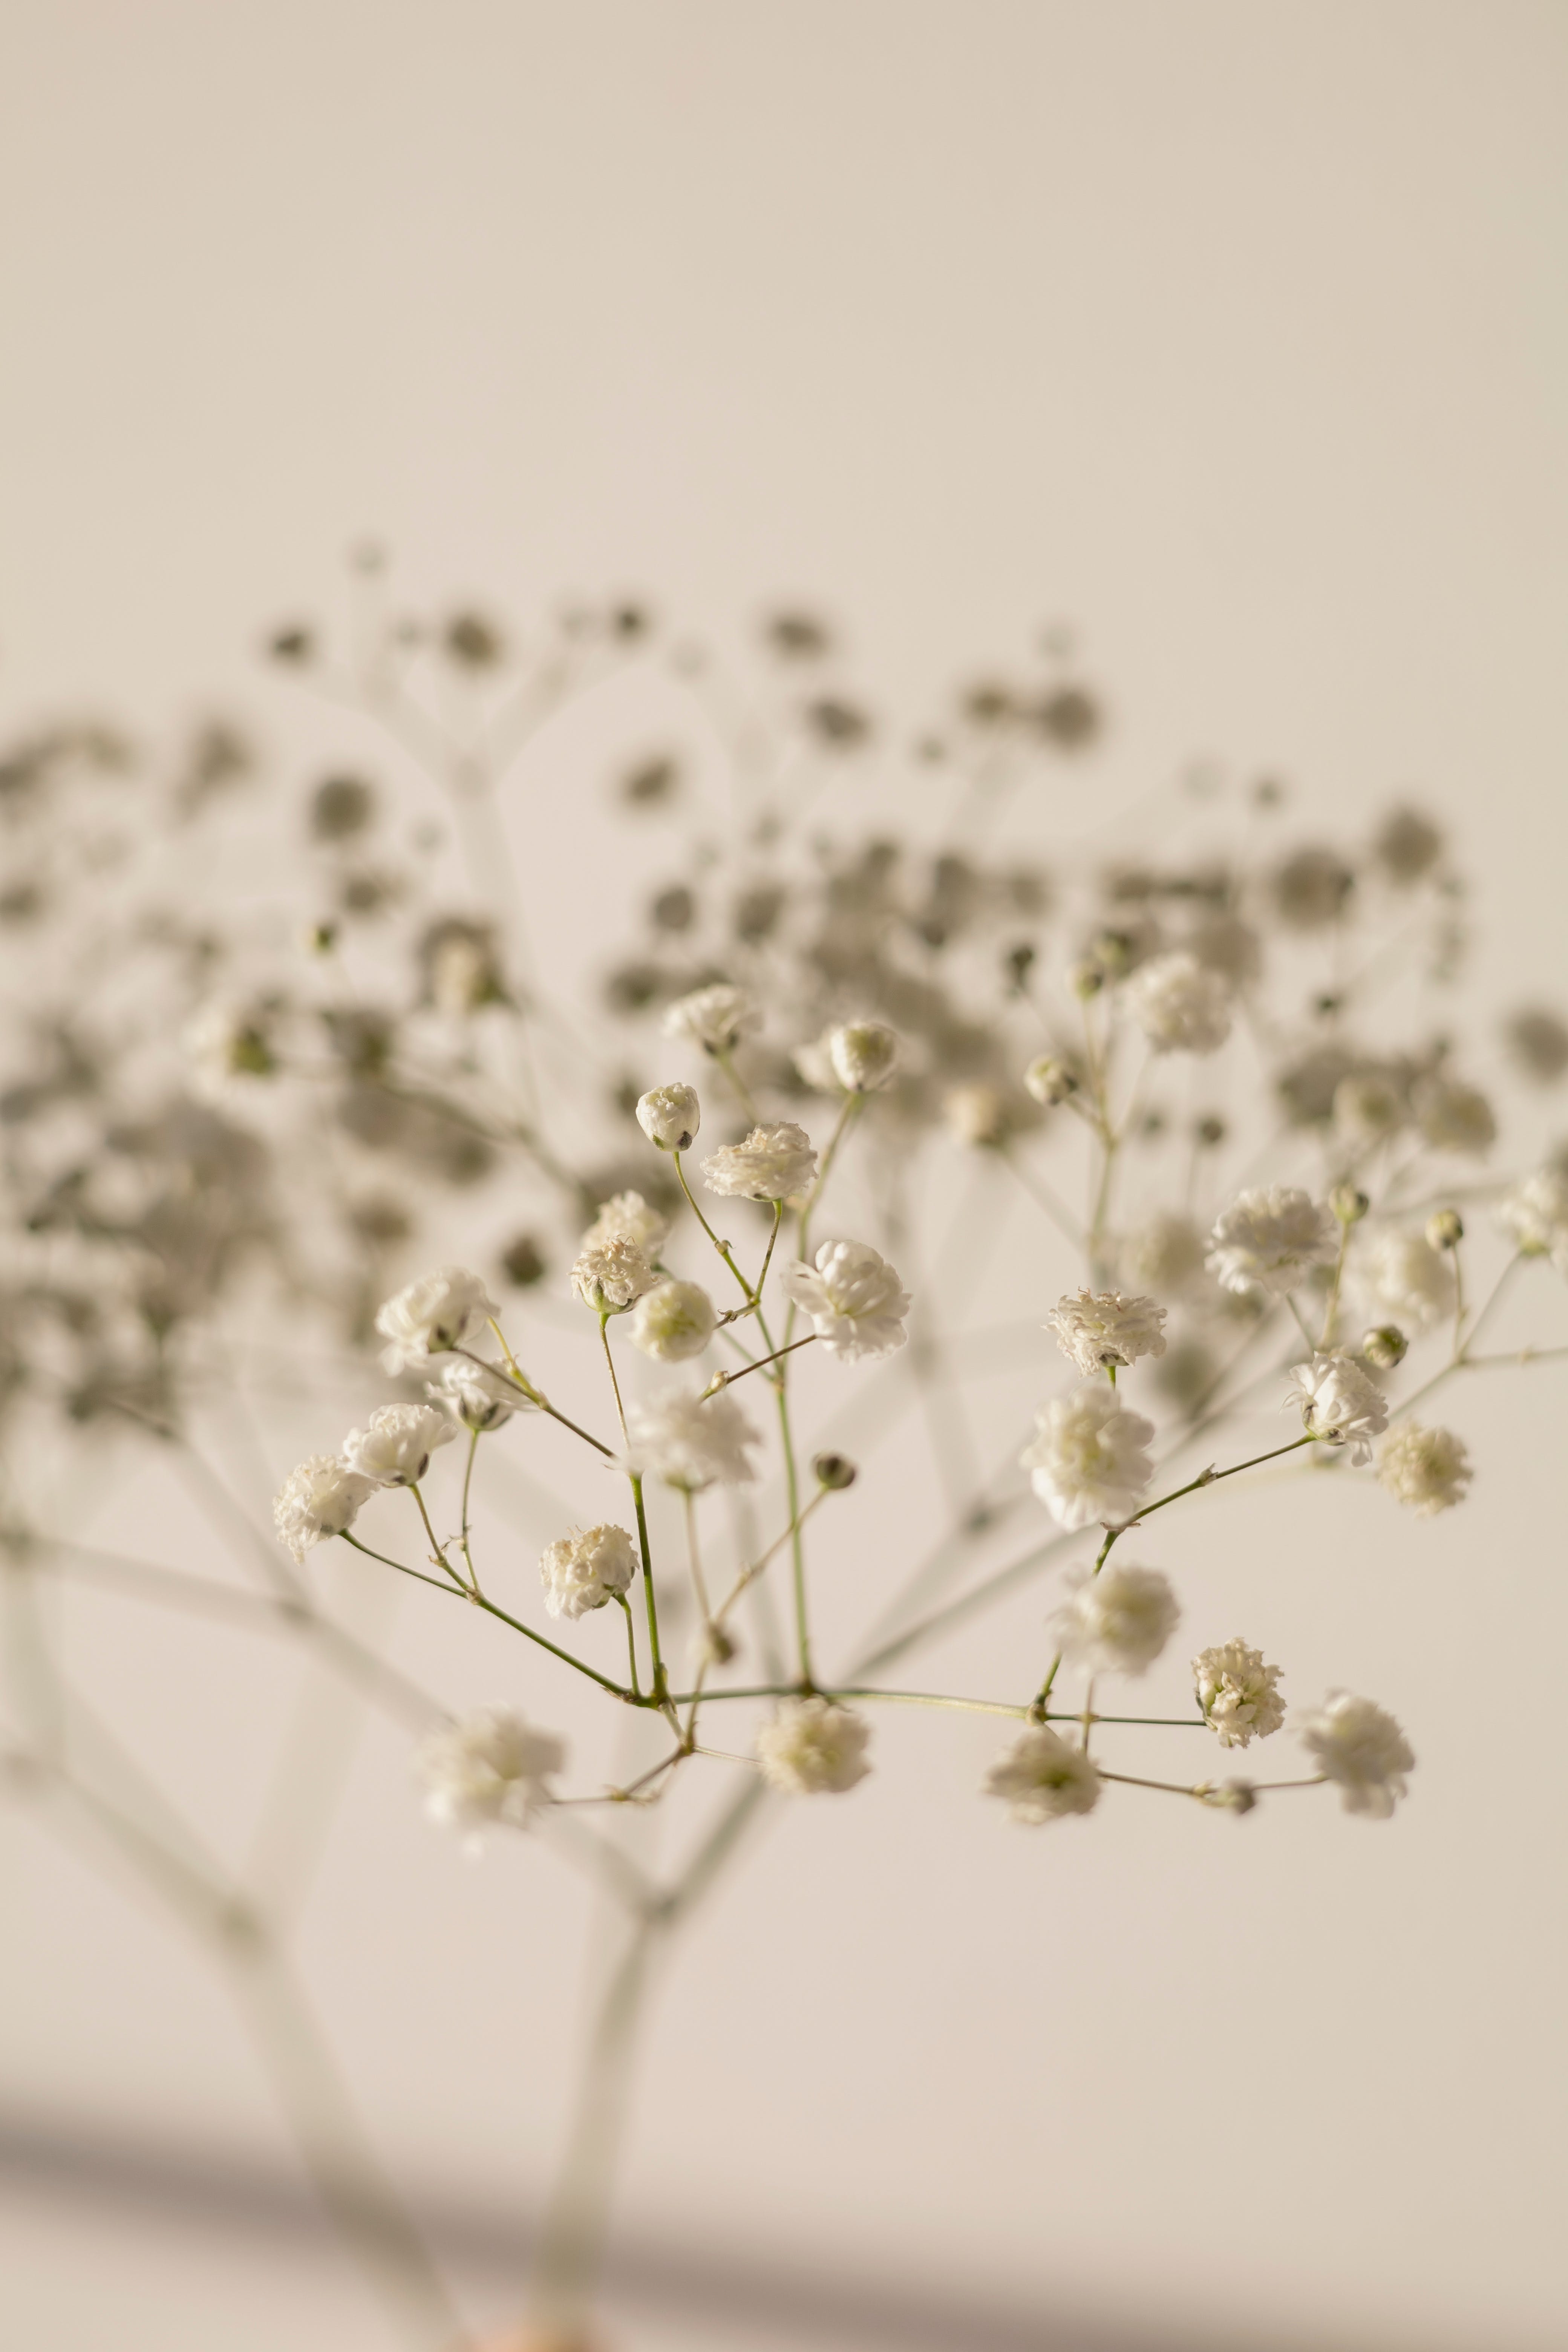 White Flowers in Macro Lens · Free